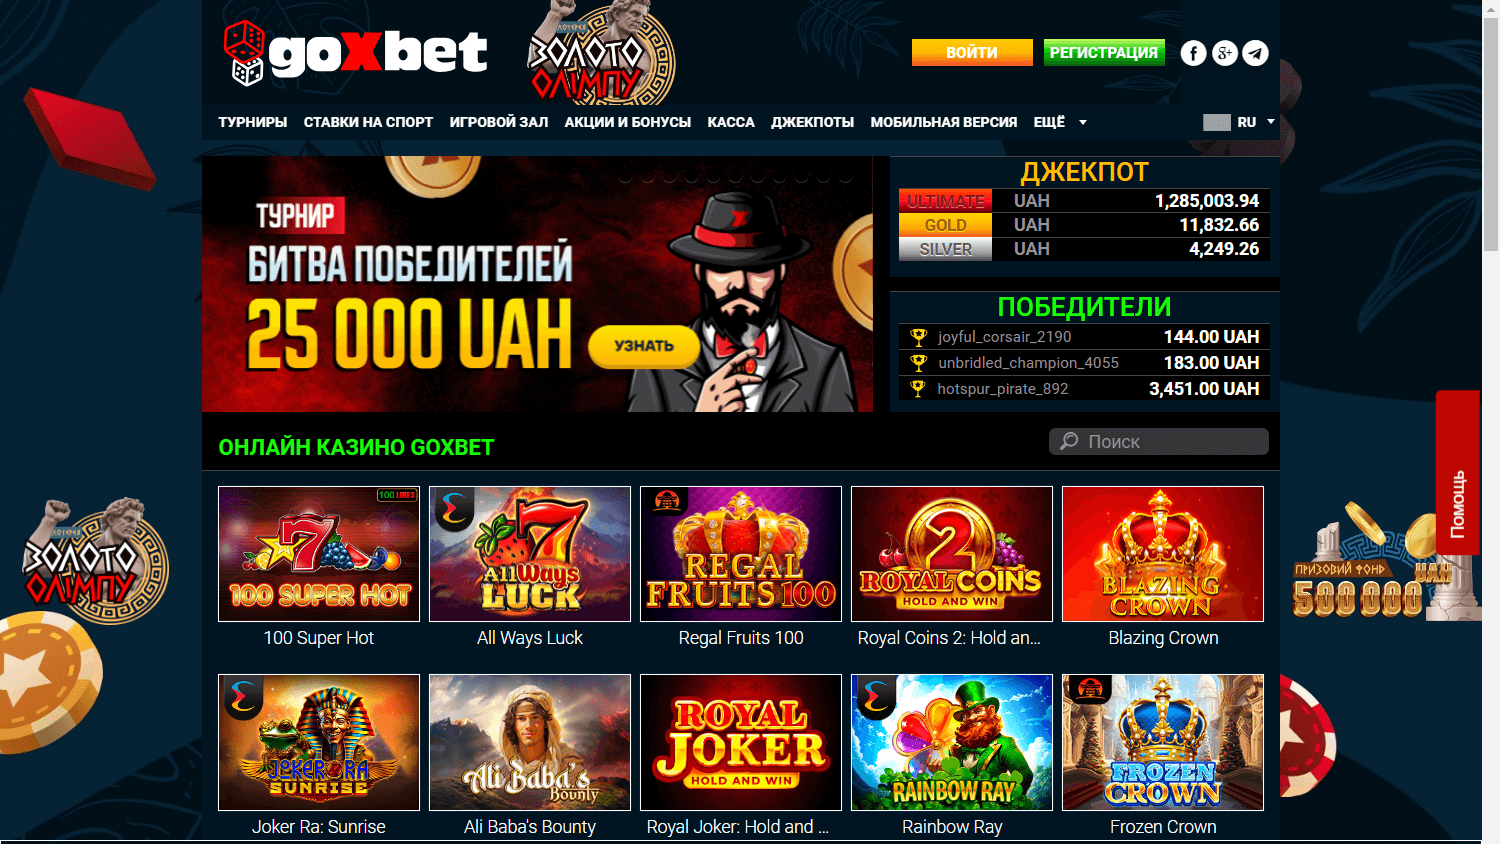 goxbet_casino_homepage_desktop